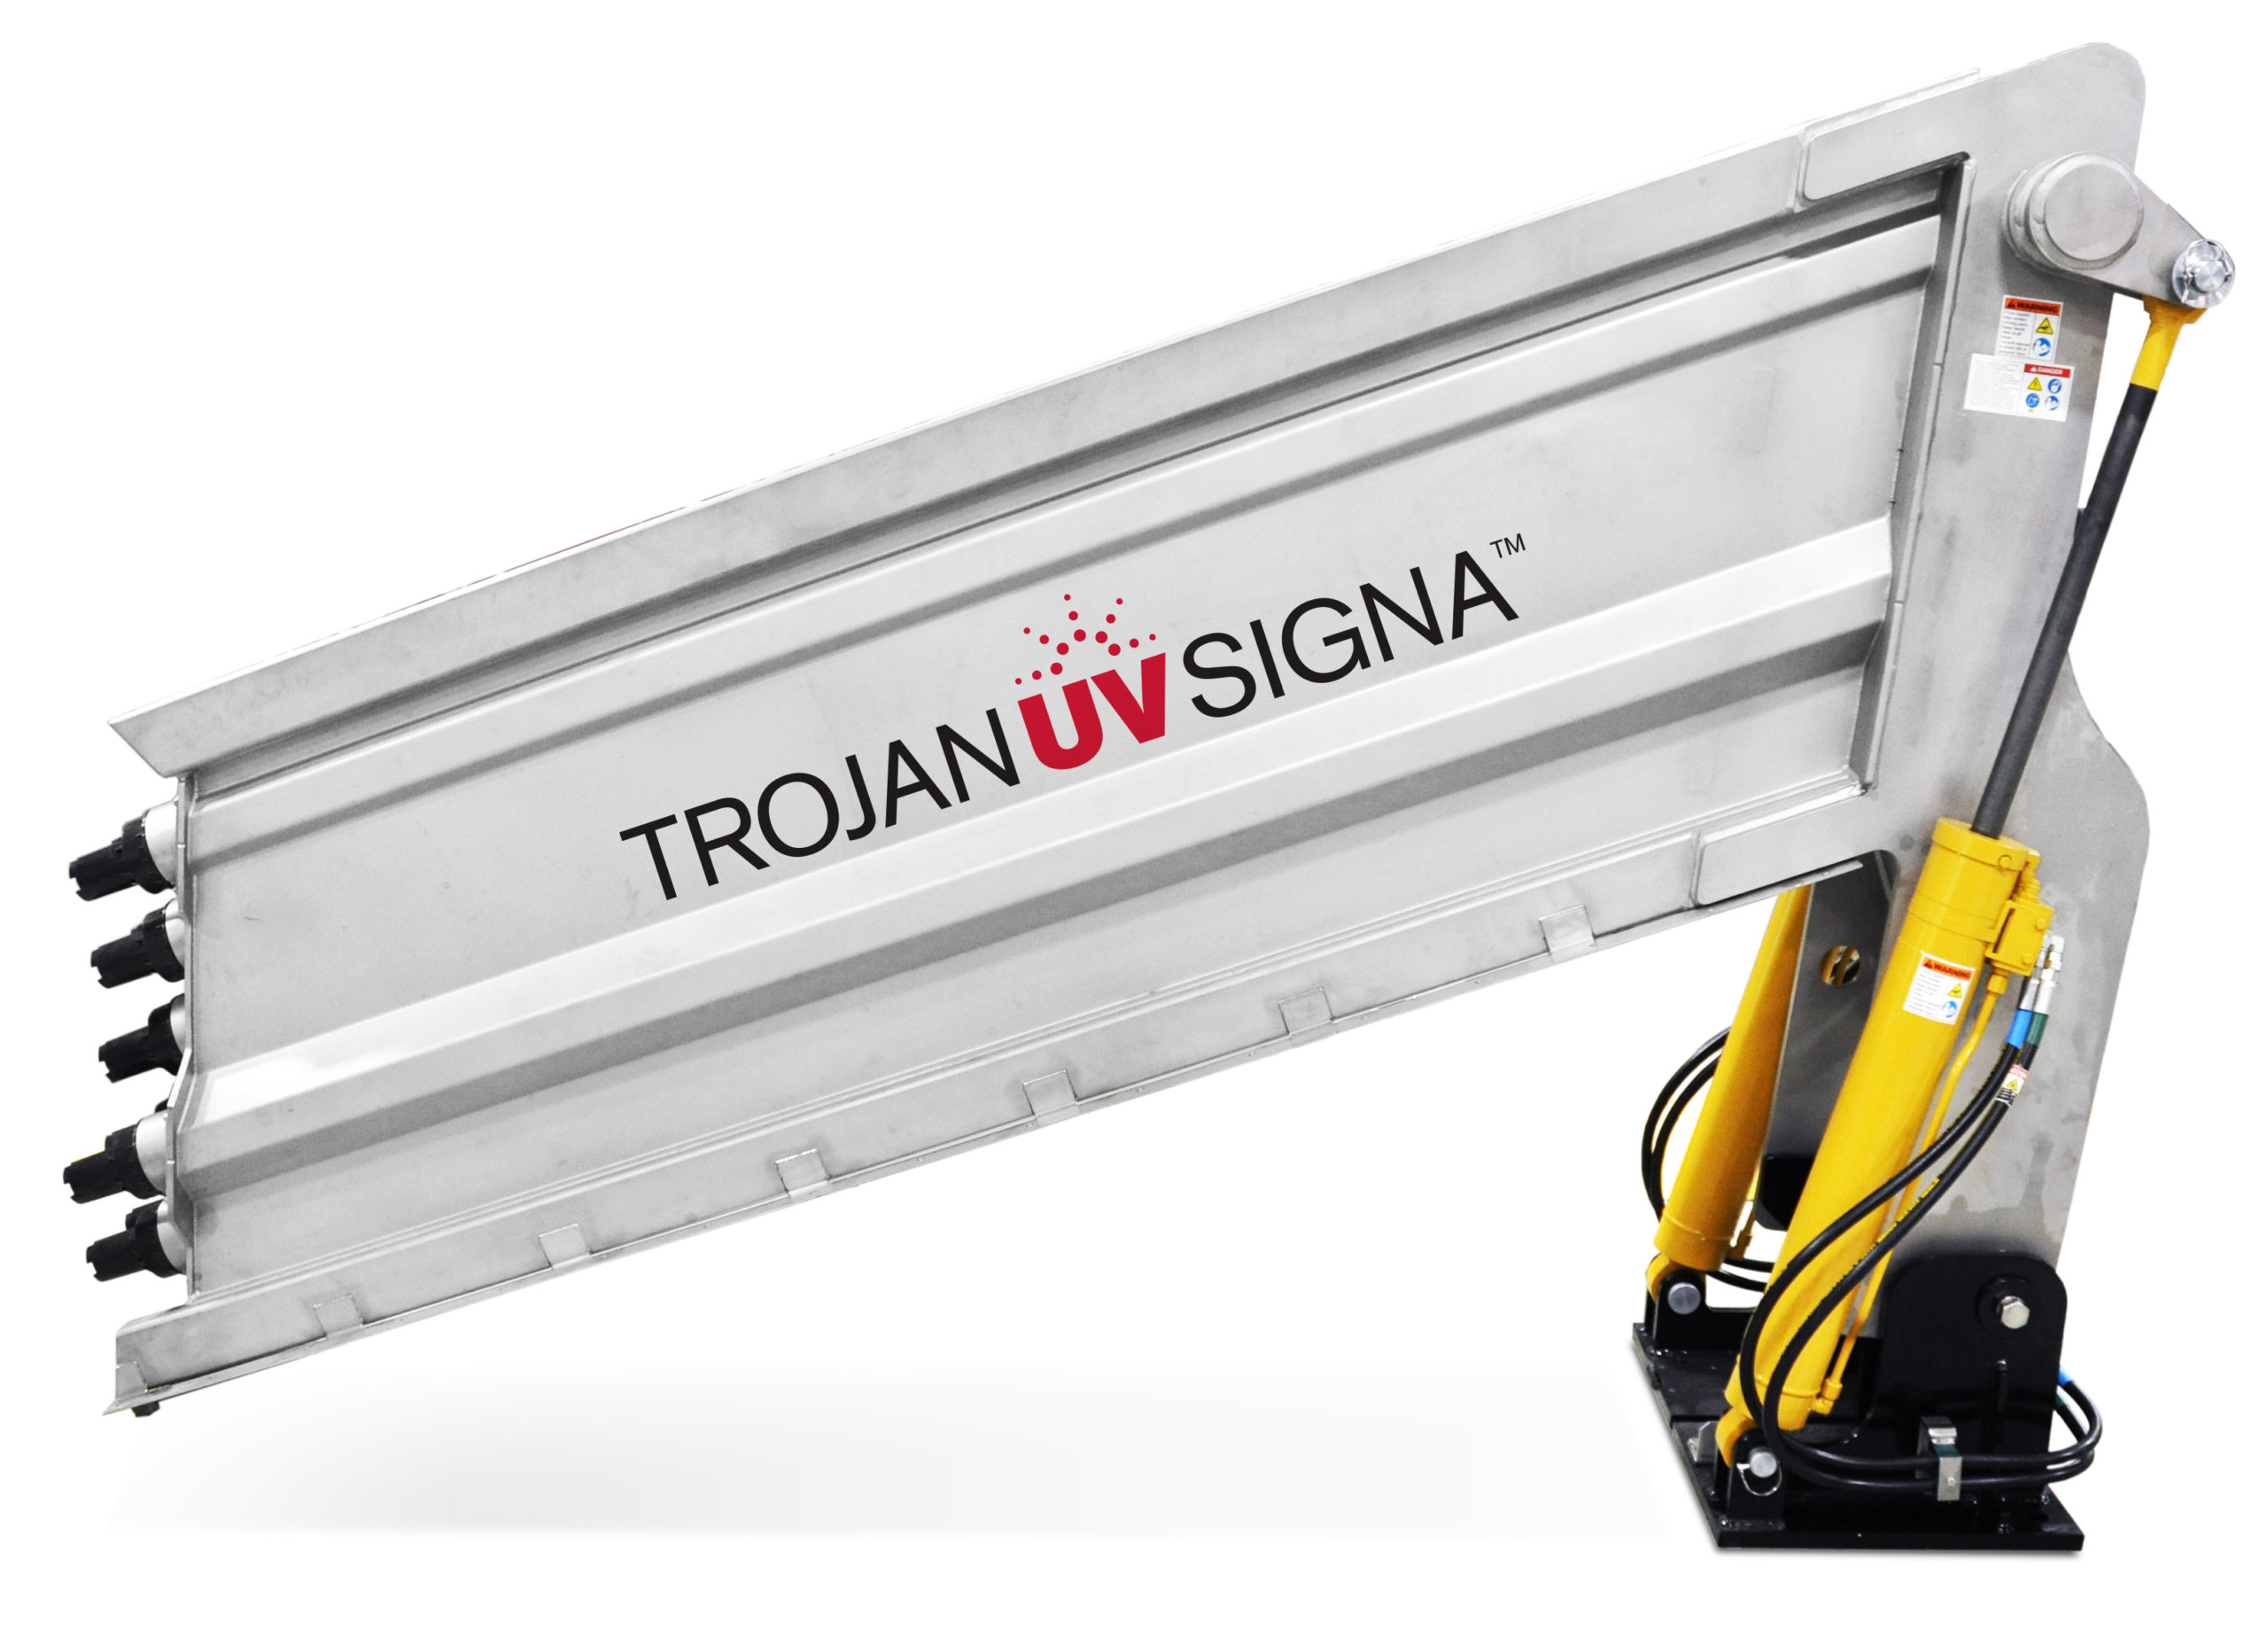 Trojan Reveals Revolutionary Wastewater Disinfection System – TrojanUVSigna™